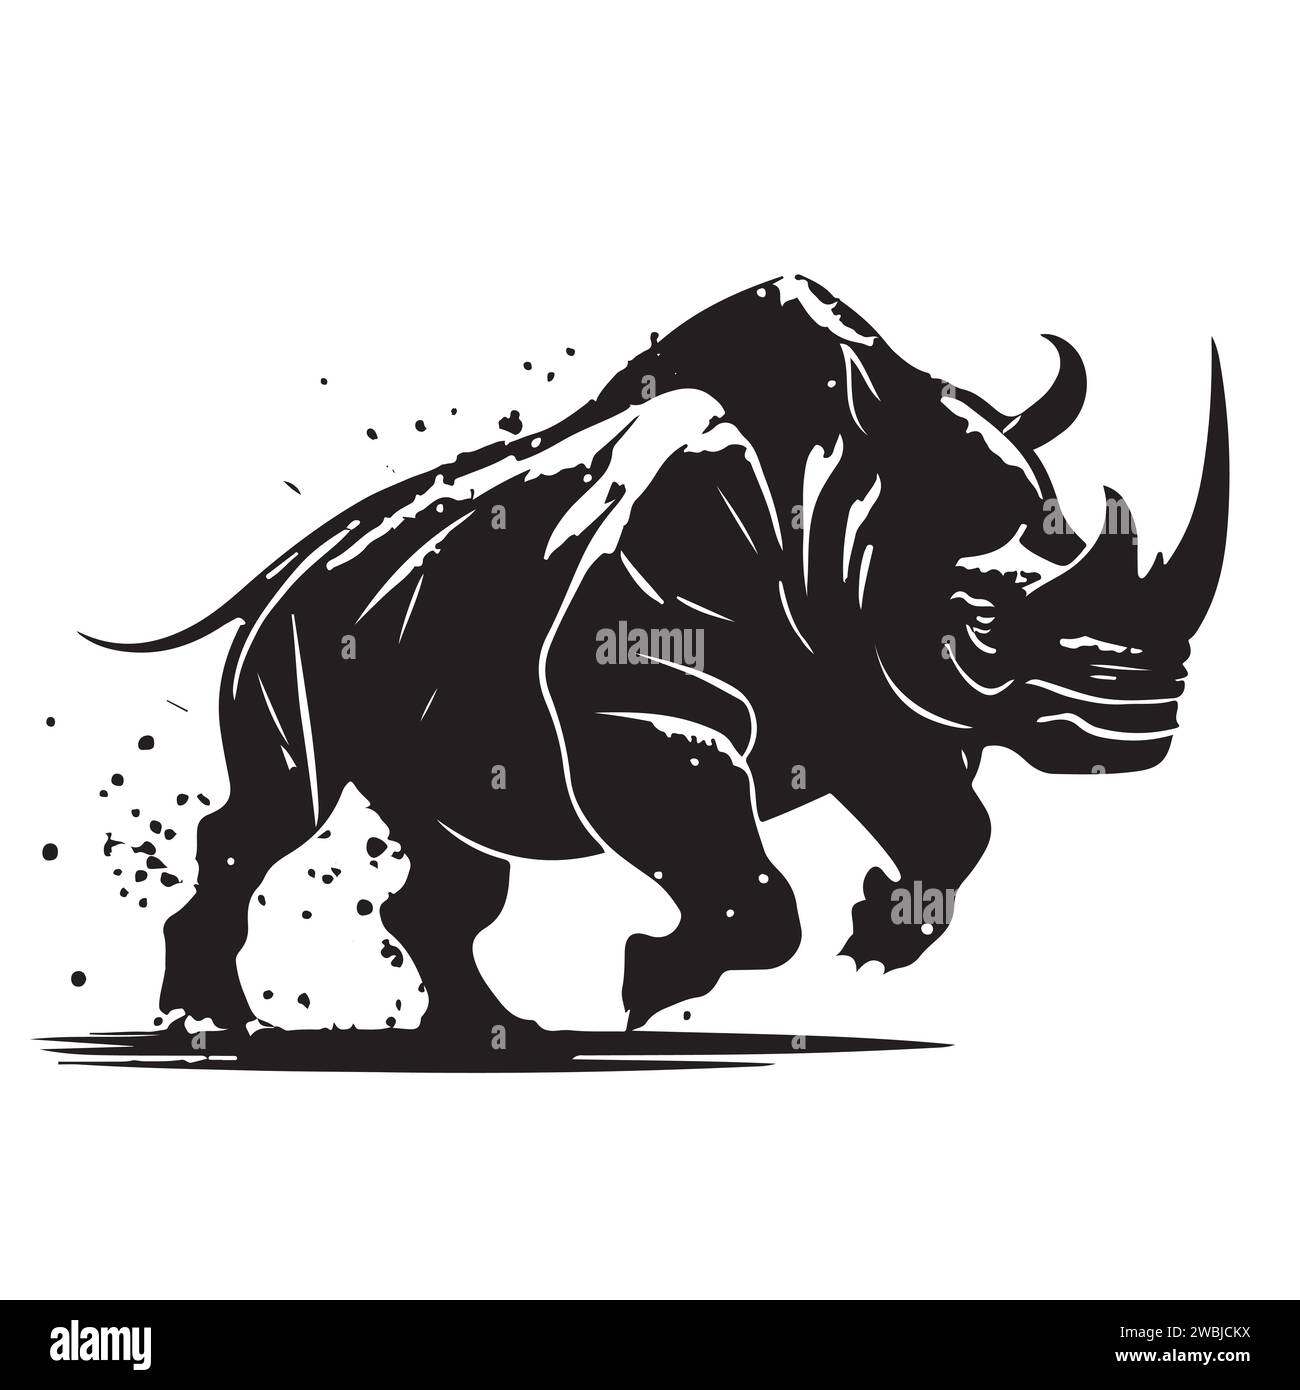 Rhino logo template. Endangered African Rhinoceros silhouette icon. Horned animal symbol. Vector illustration Stock Vector